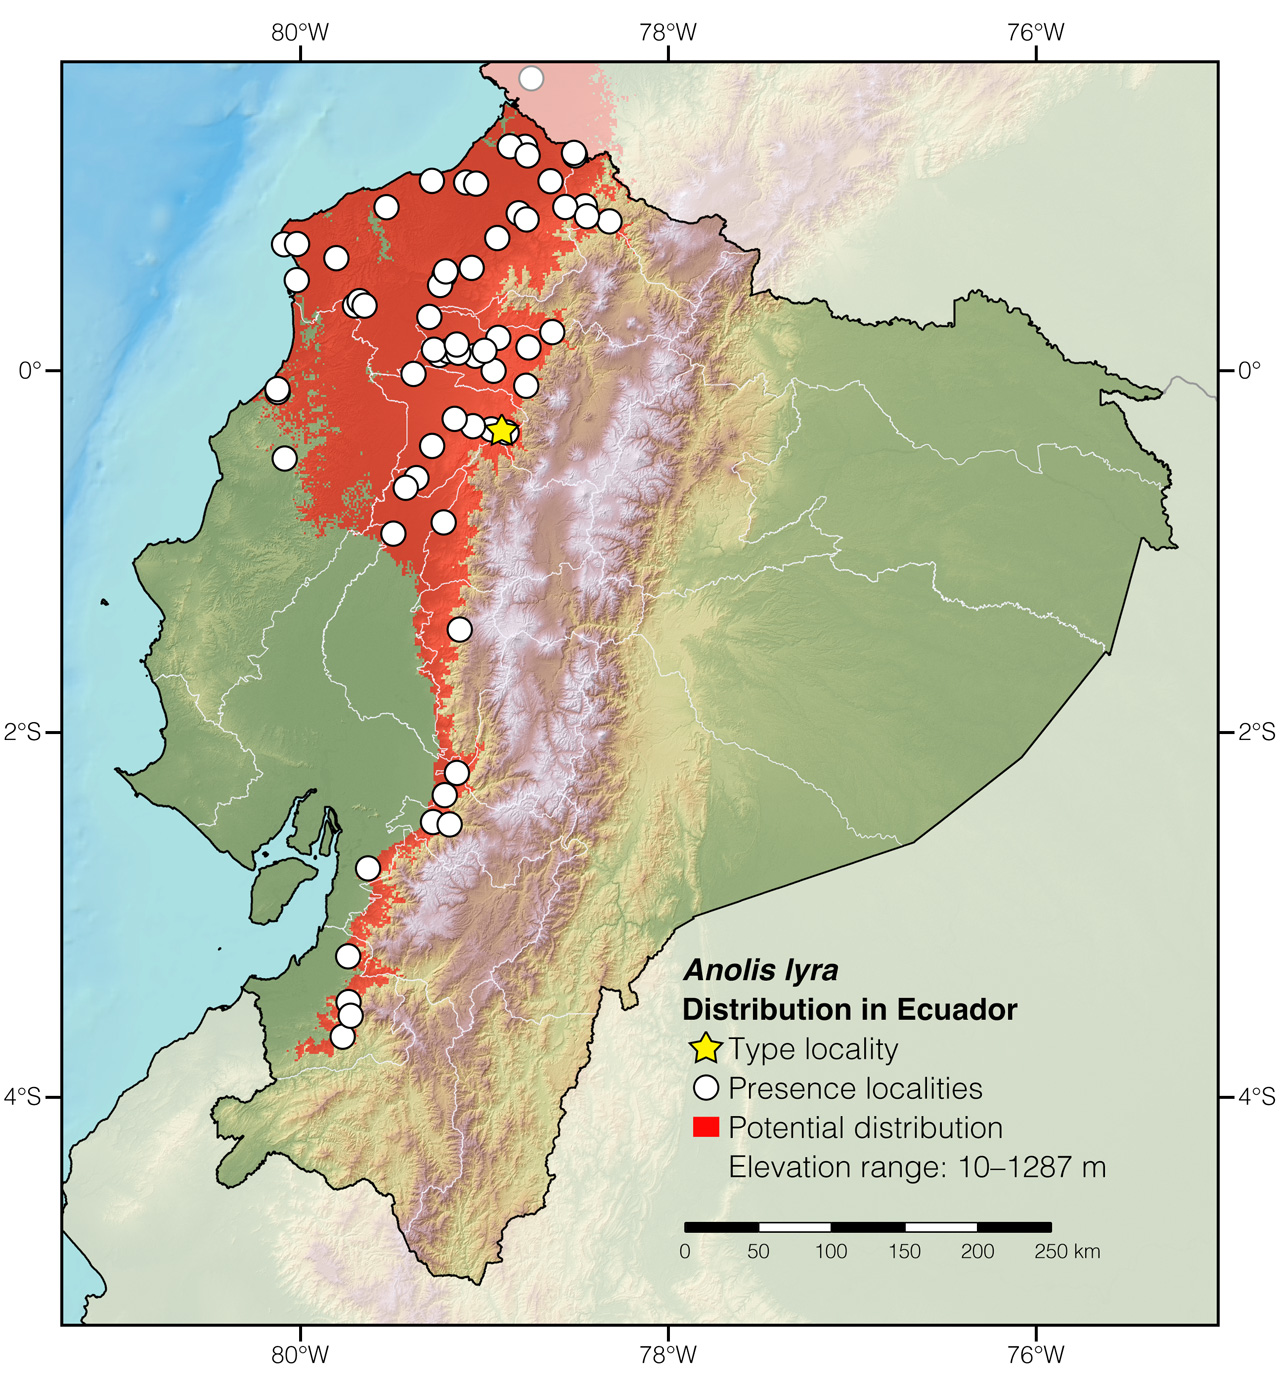 Distribution of Anolis lyra in Ecuador